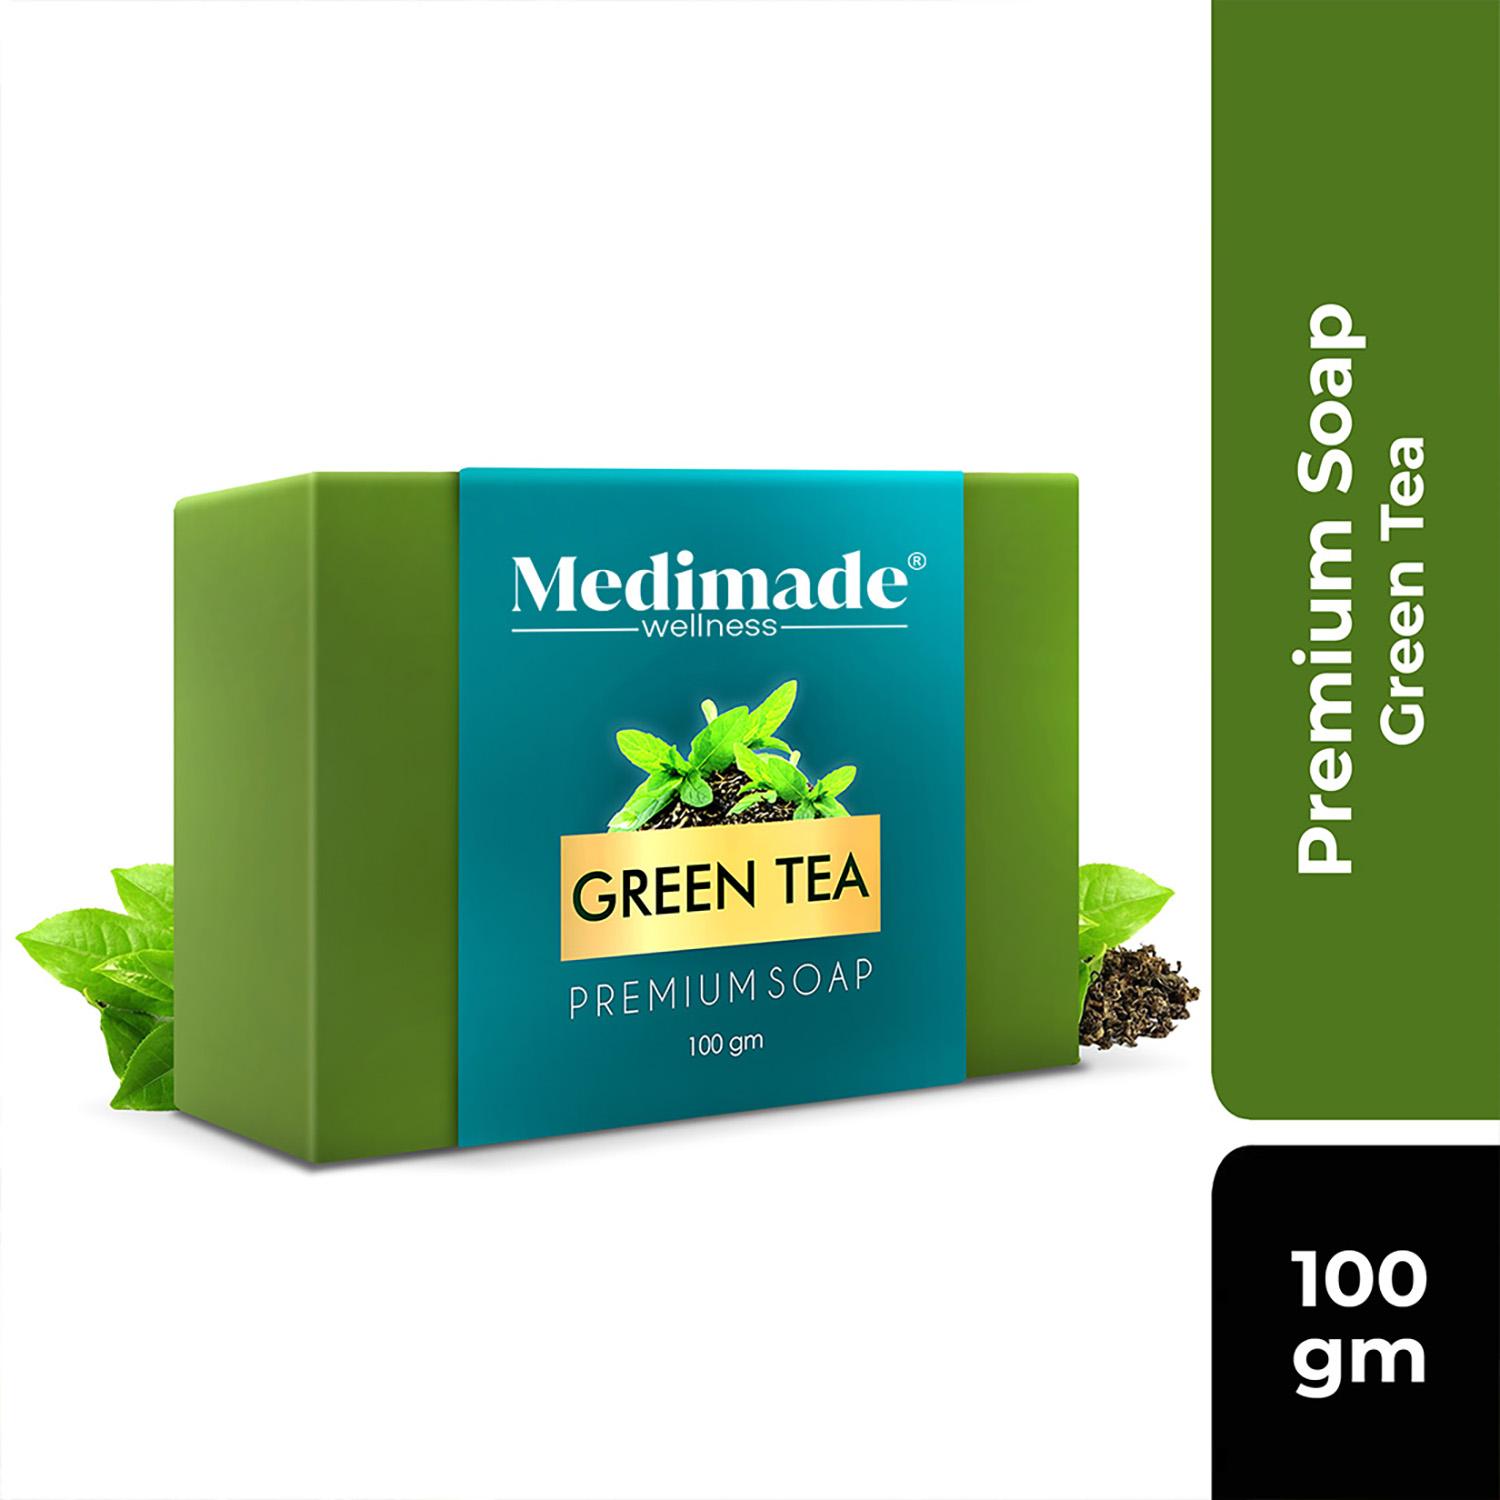 Medimade Green Tea Premium Soap (100g)